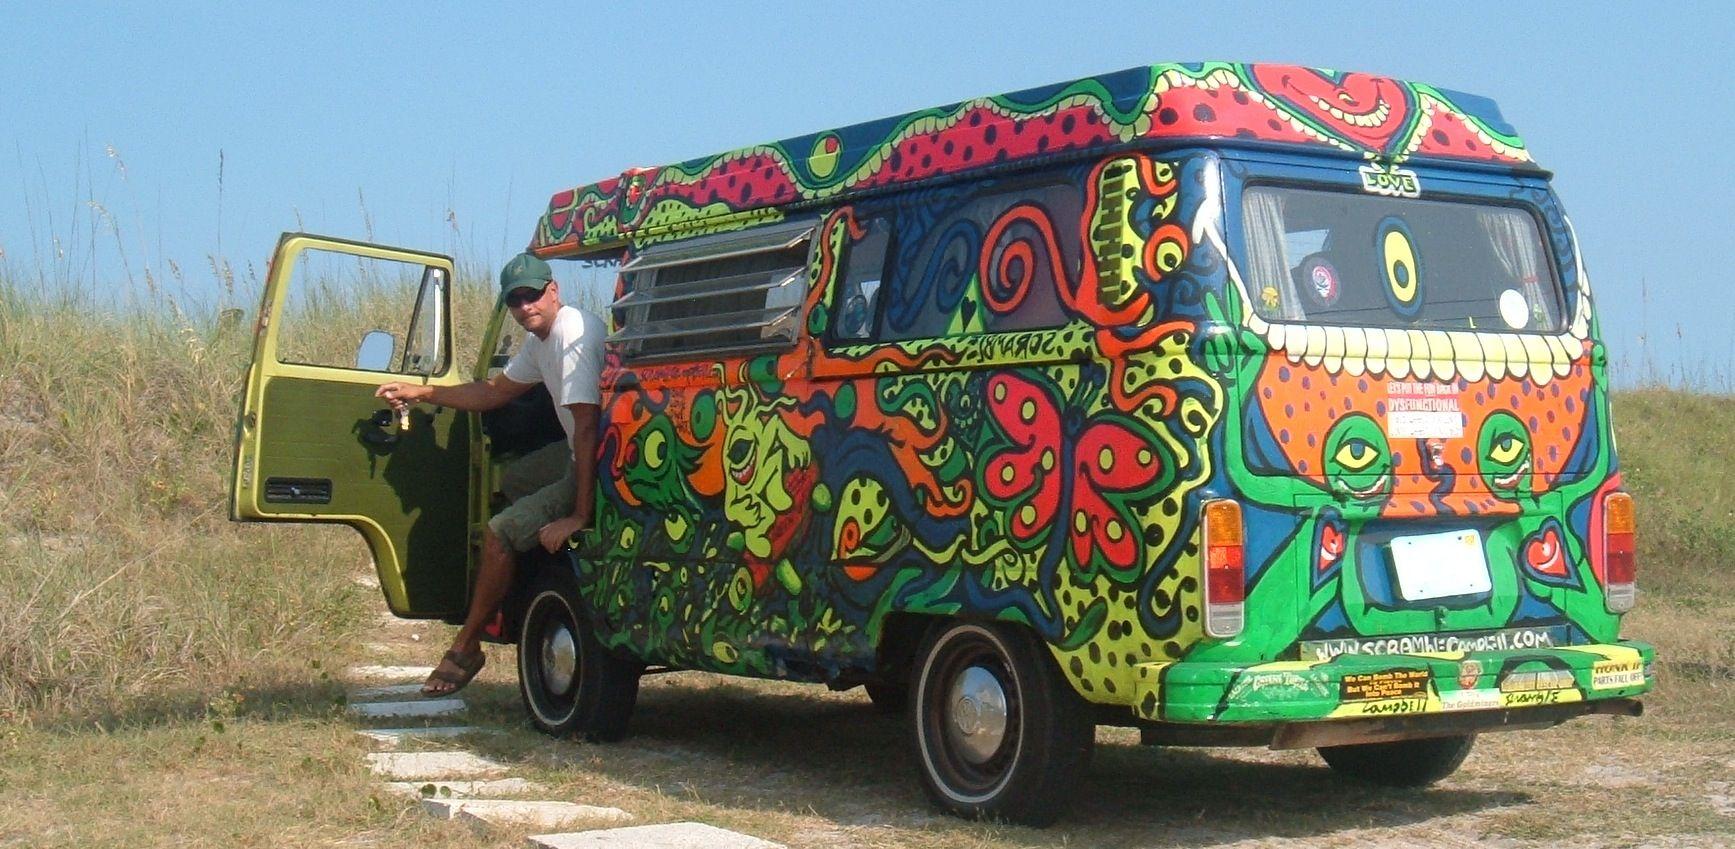 Whoa, Hippie van. awesome